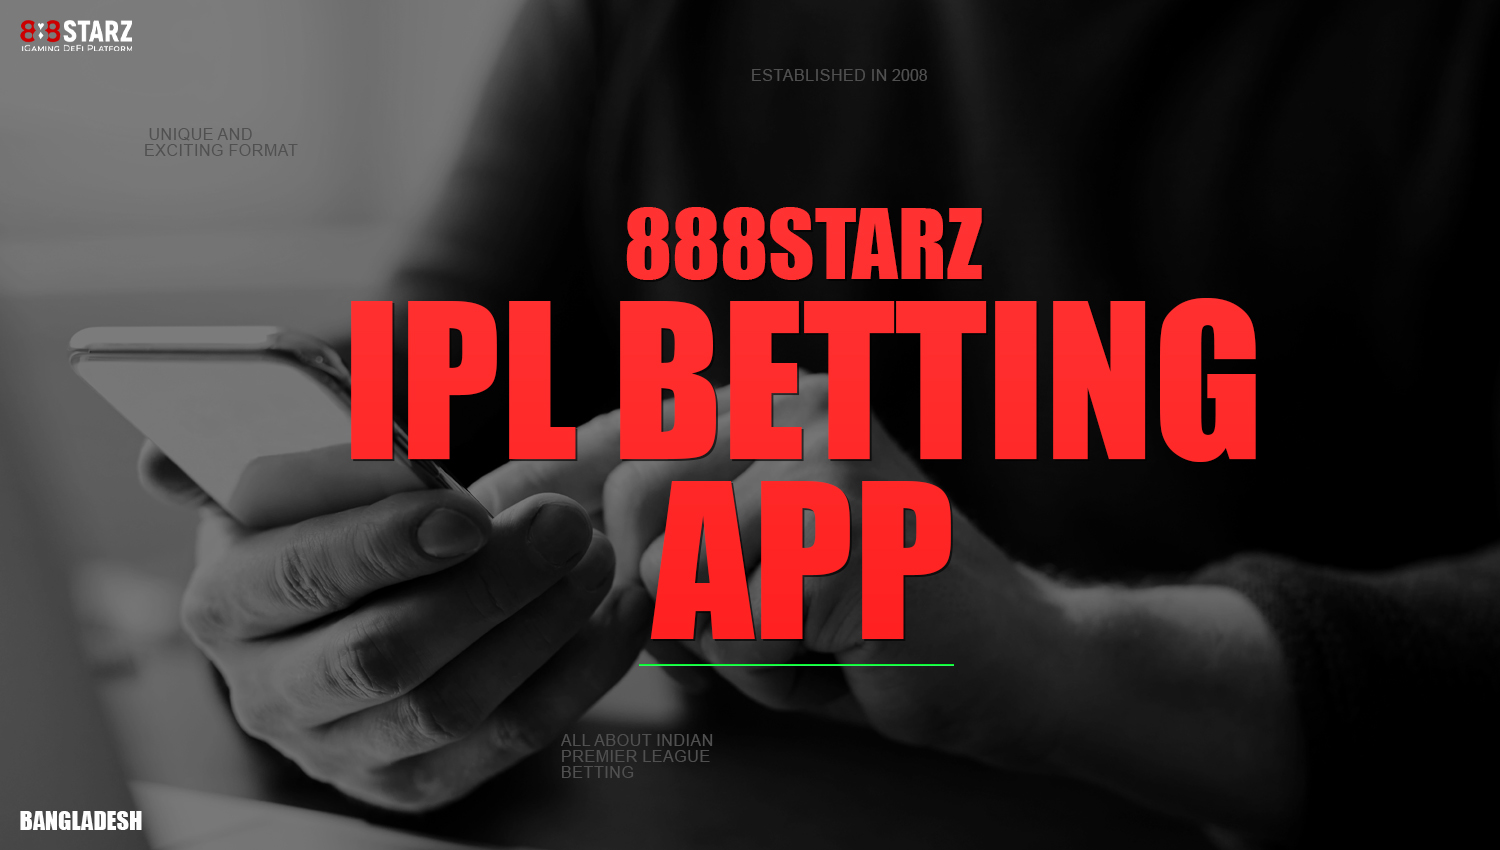 888starz bangladesh mobile app for IPL betting